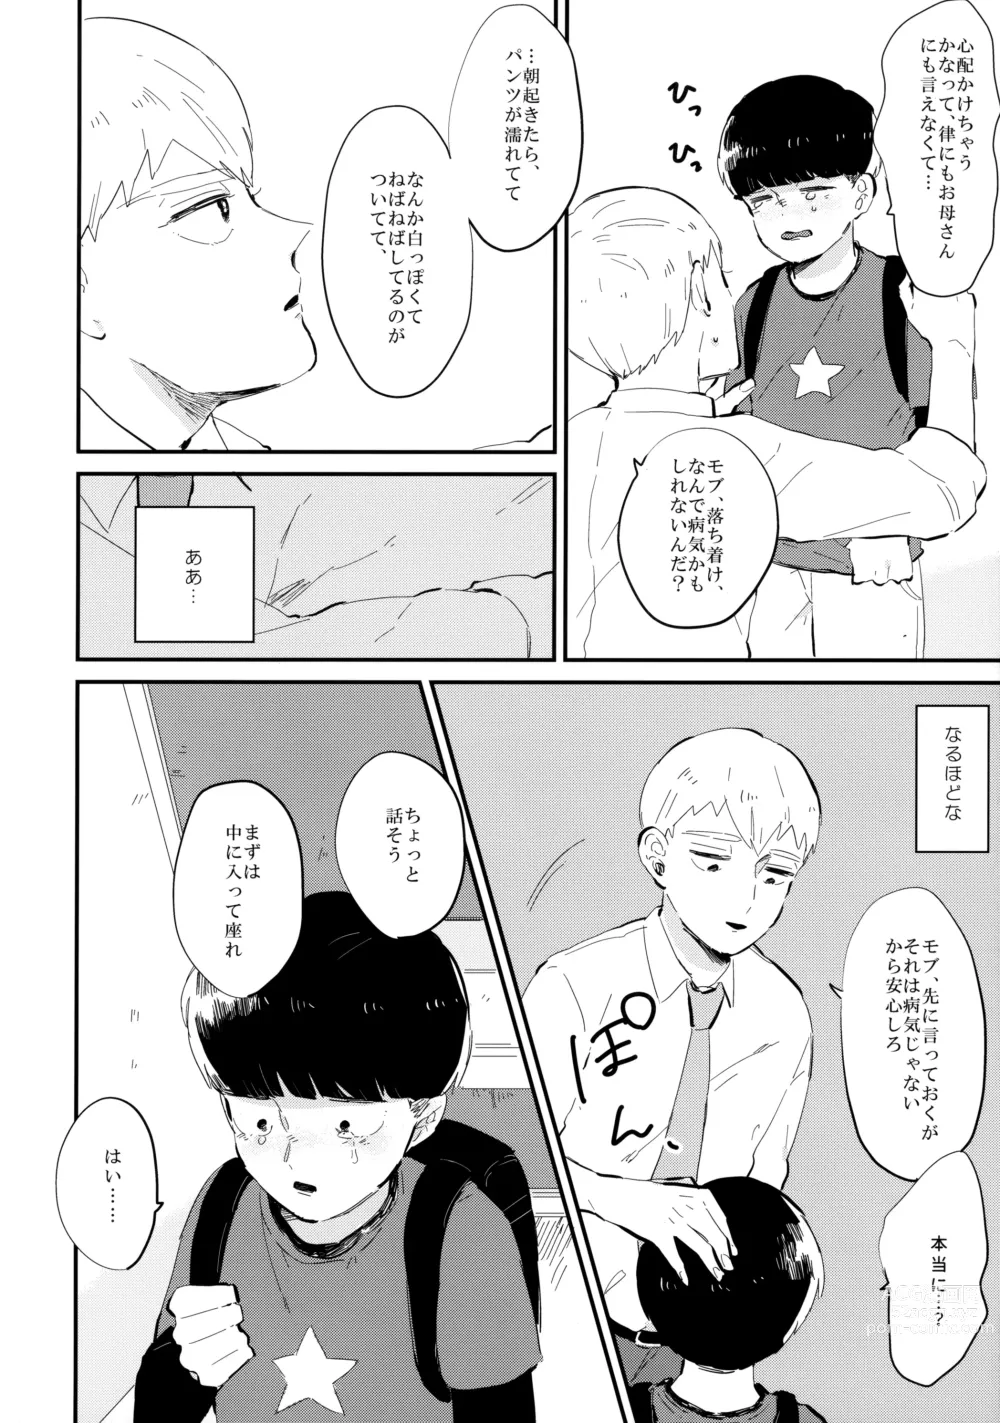 Page 7 of doujinshi Milky Boy, Oshiete Ageru.